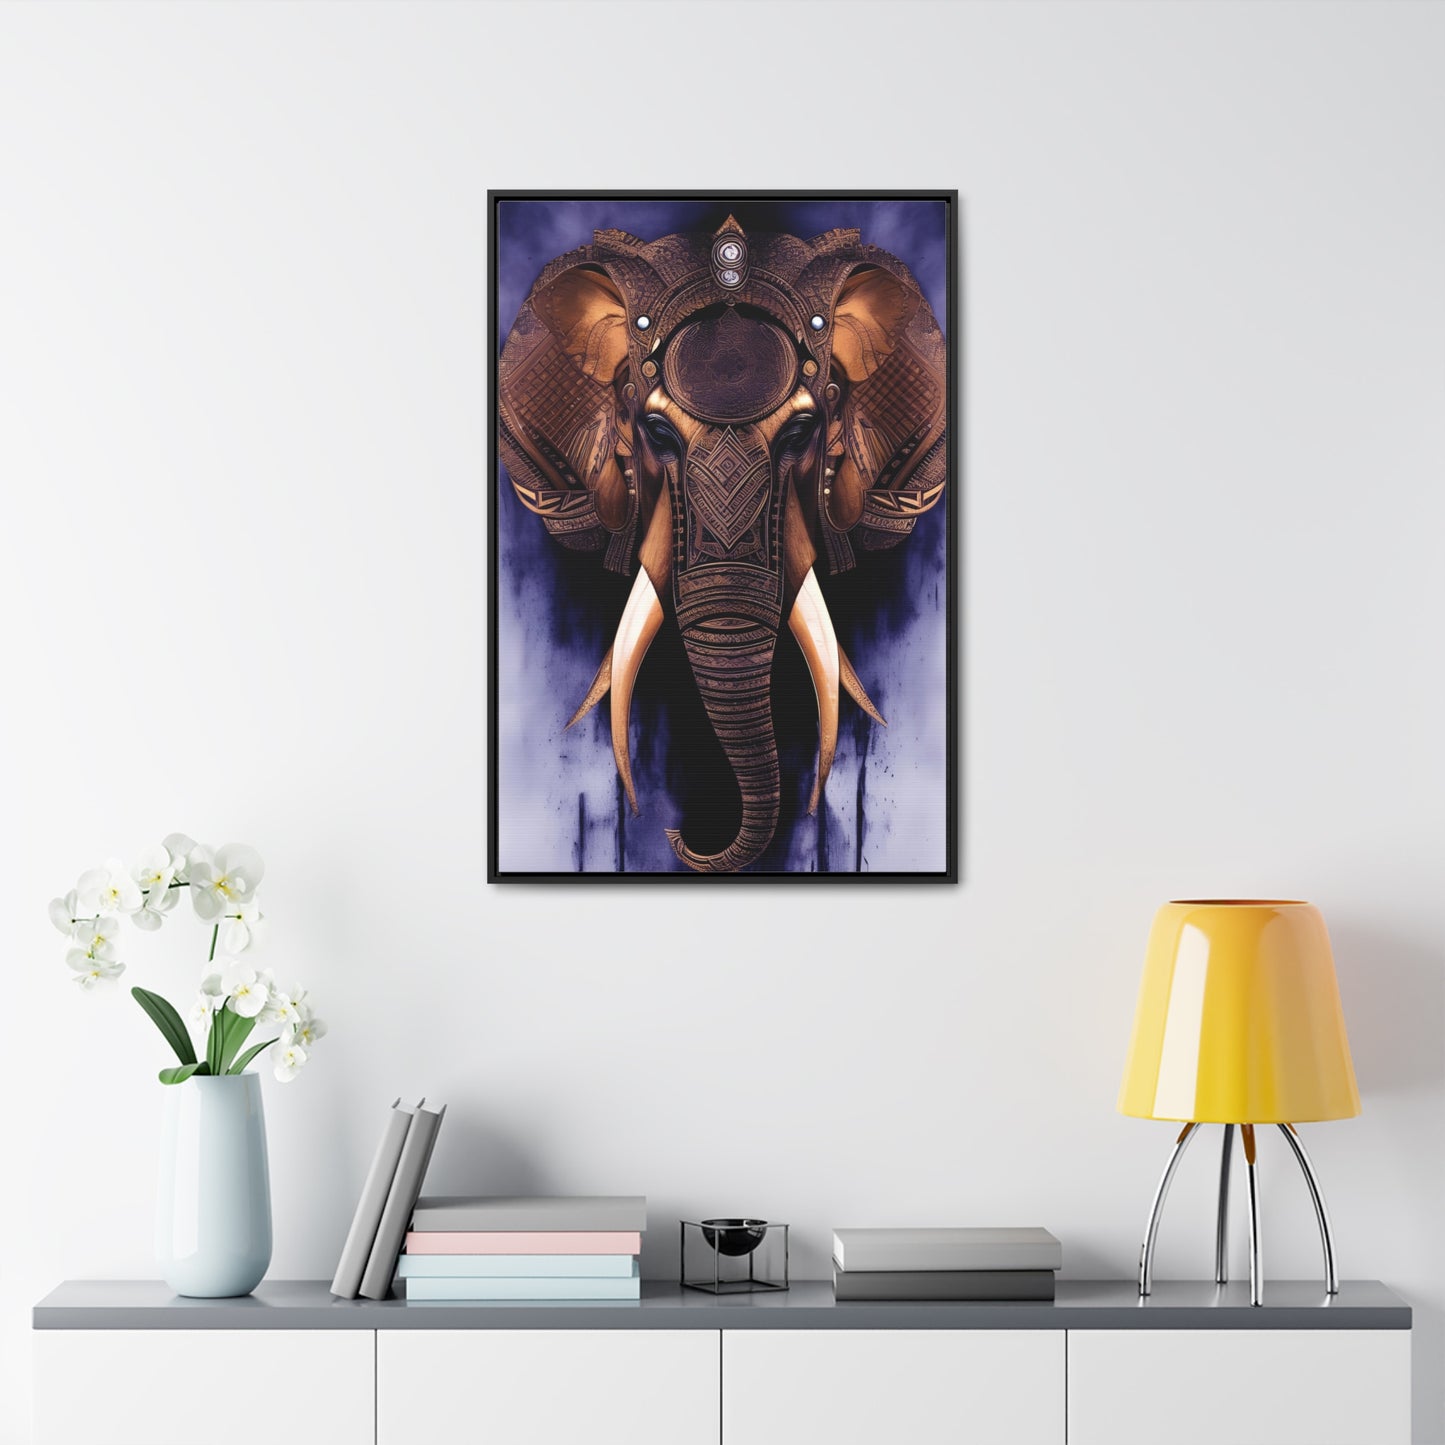 Elephant Themed Modern Wall Art - Tribal Elephant Head on Purple Background Print on Canvas in a Floating Frame